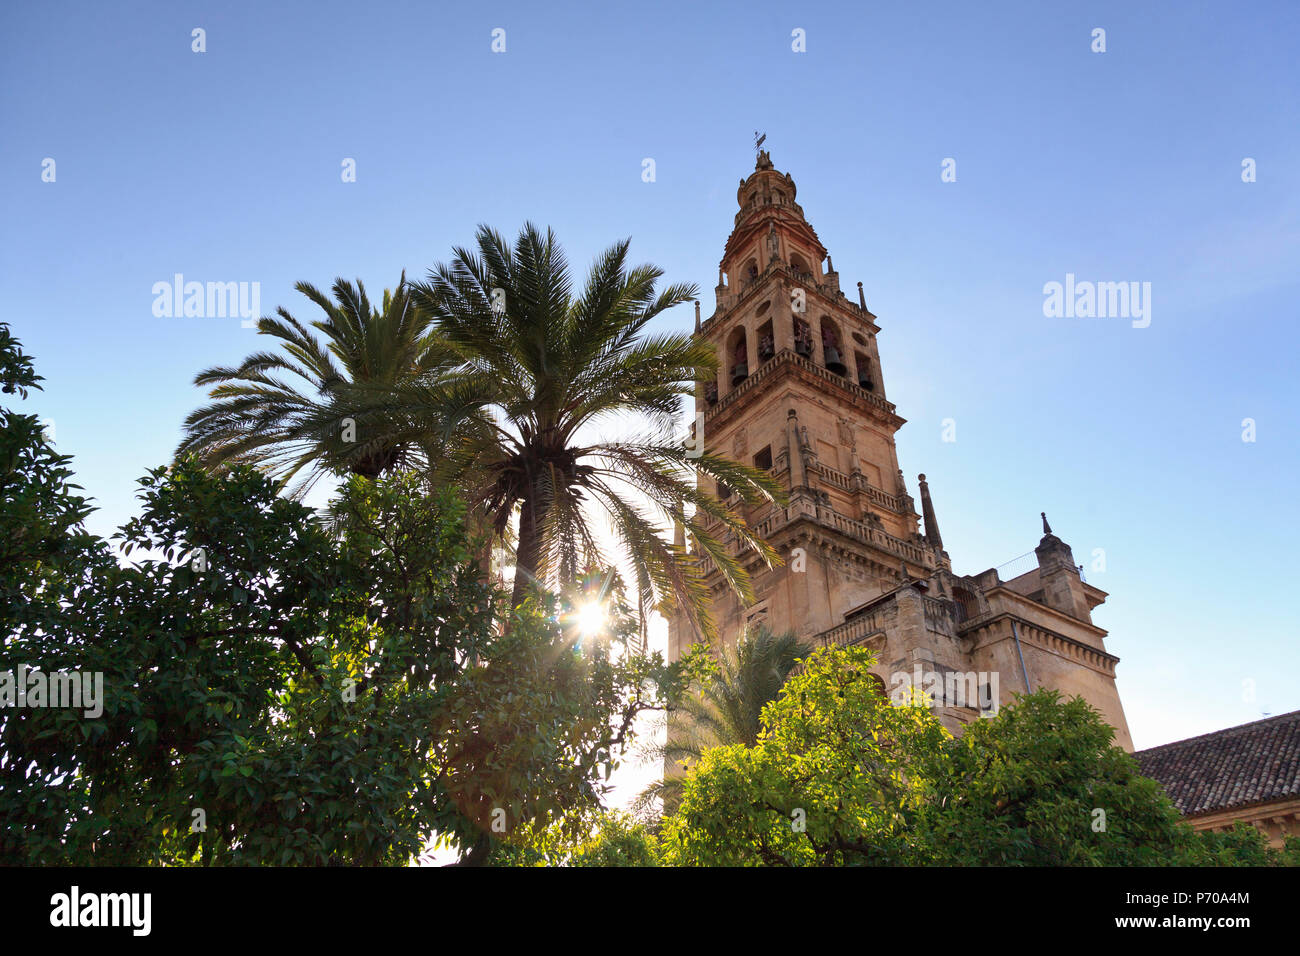 Spain, Andalucia, Cordoba, Mezquita Catedral (Mosque - Cathedral) (UNESCO Site) Stock Photo